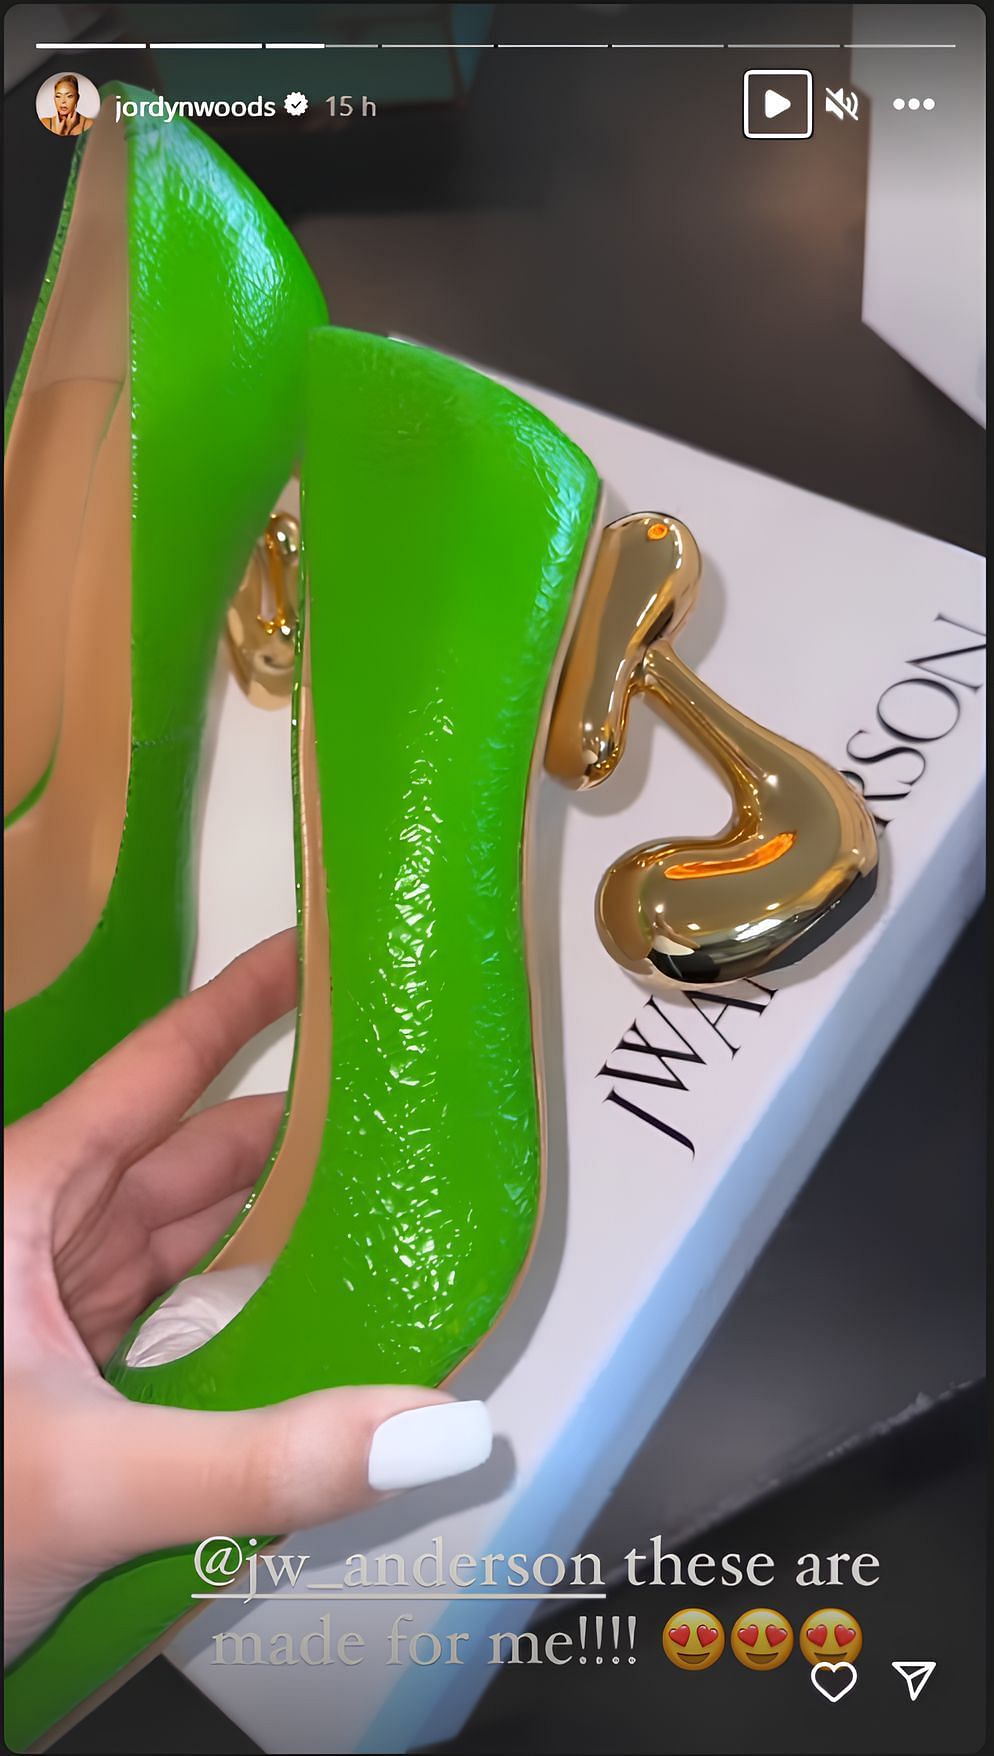 Jordyn Woods shared her dazzling green heel pumps